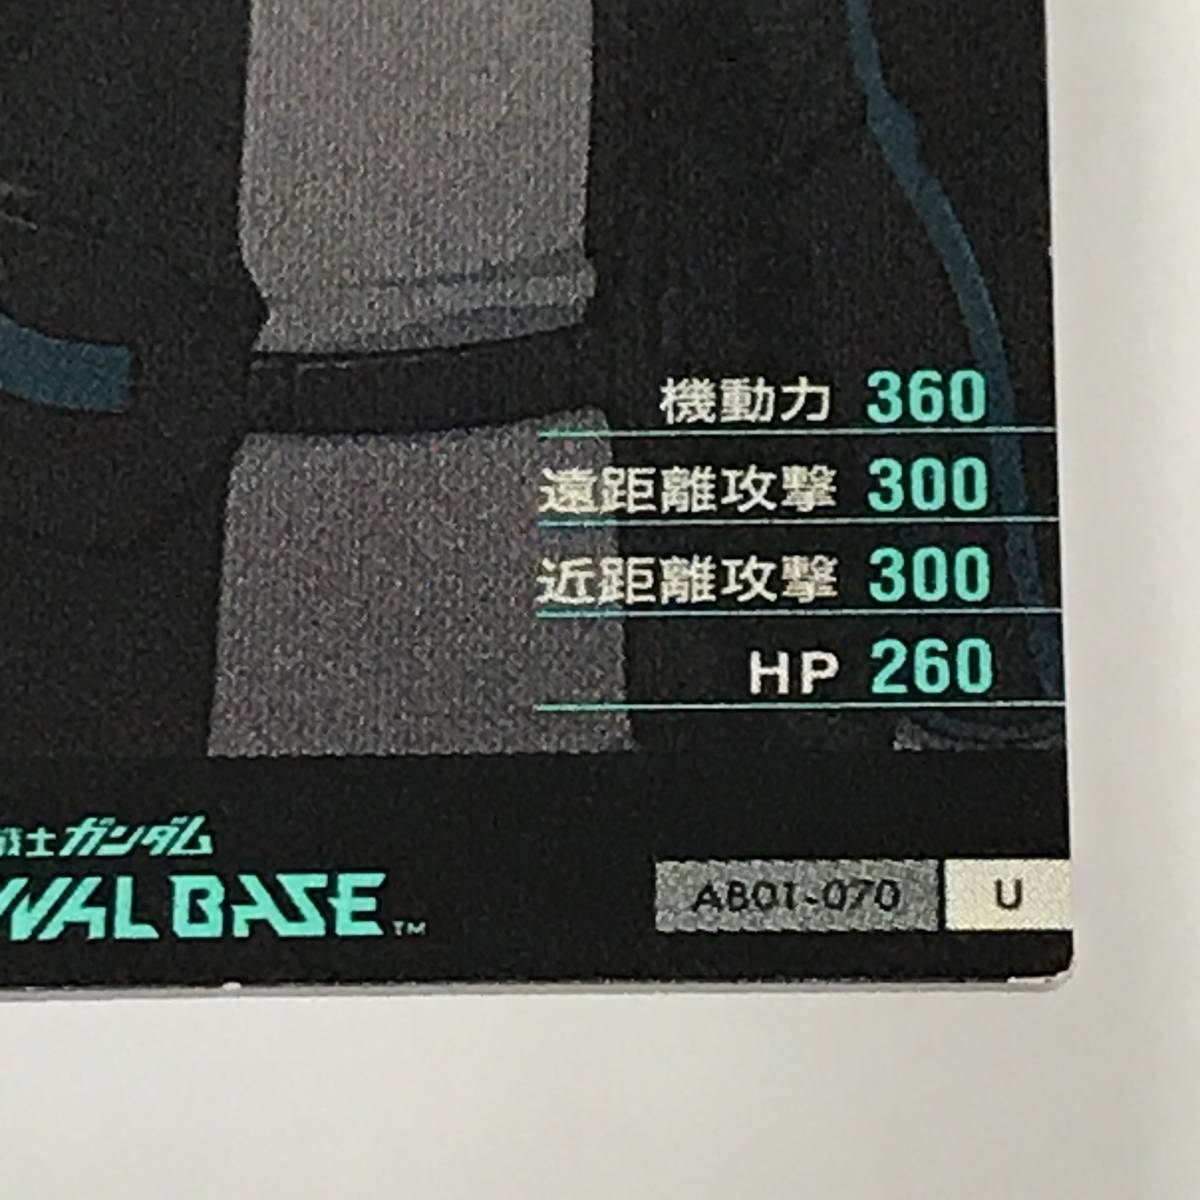 0867579Q* Gundam arsenal base U rare ( Ultimate rare ) 4 pieces set 